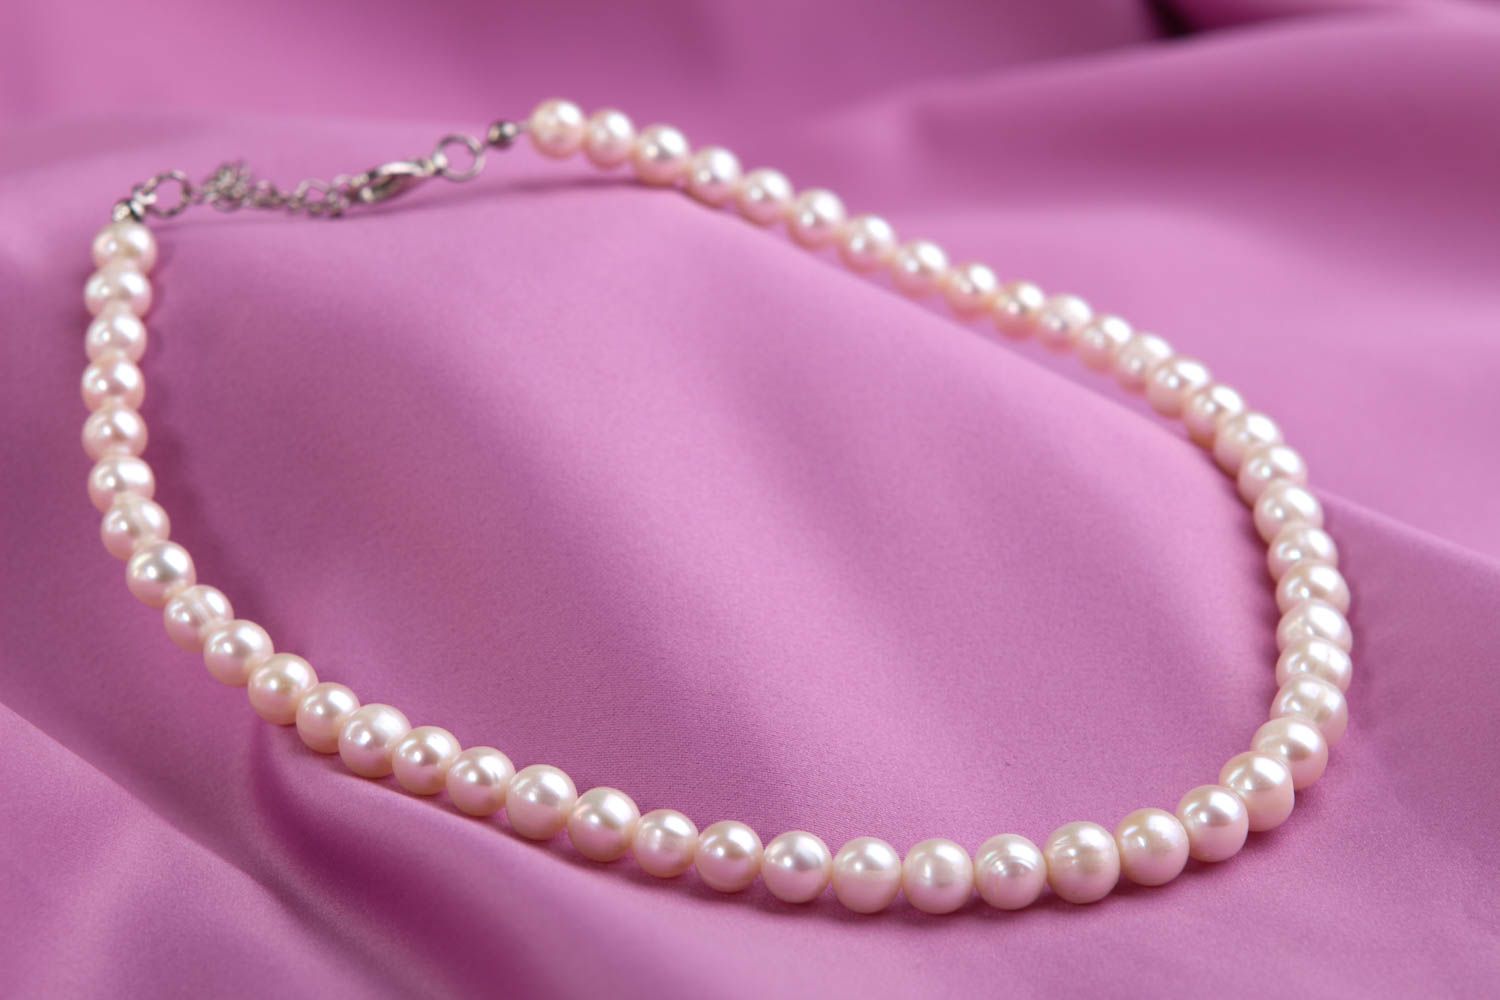 Handmade elegant necklace designer stylish accessory jewelry for women photo 1